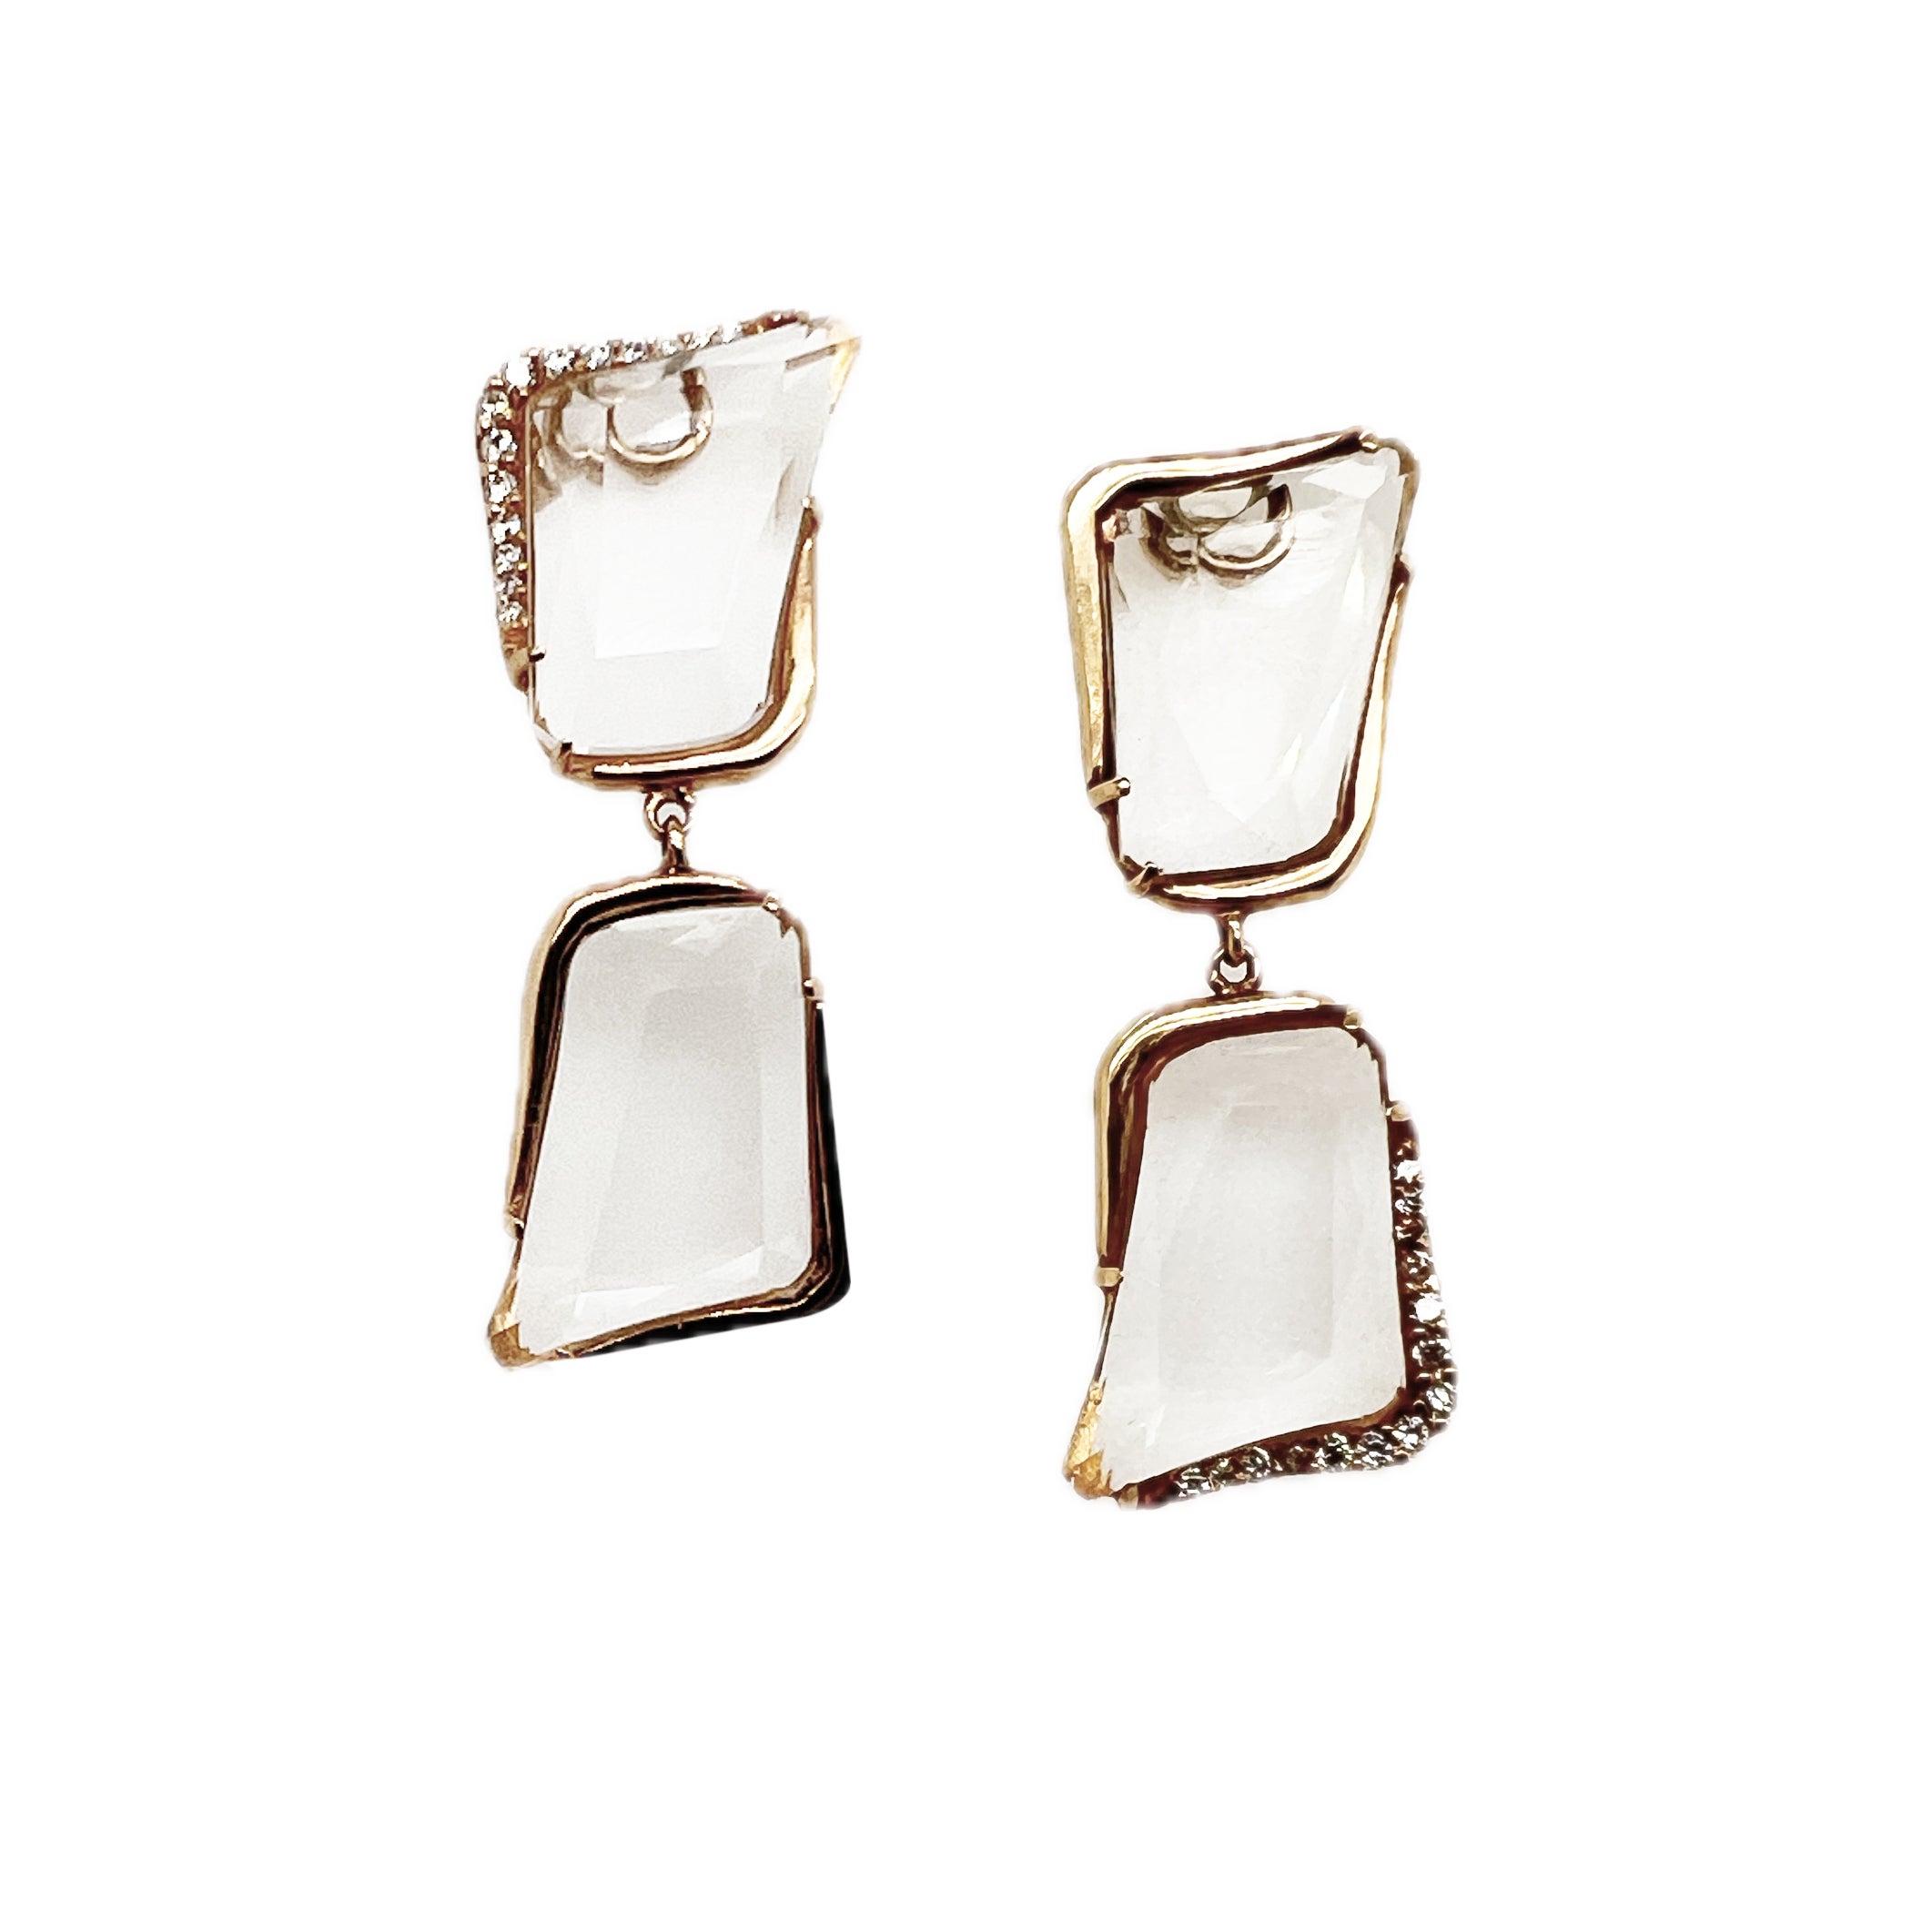 18kt rose gold earrings with diamonds & asymmetric rock crystal